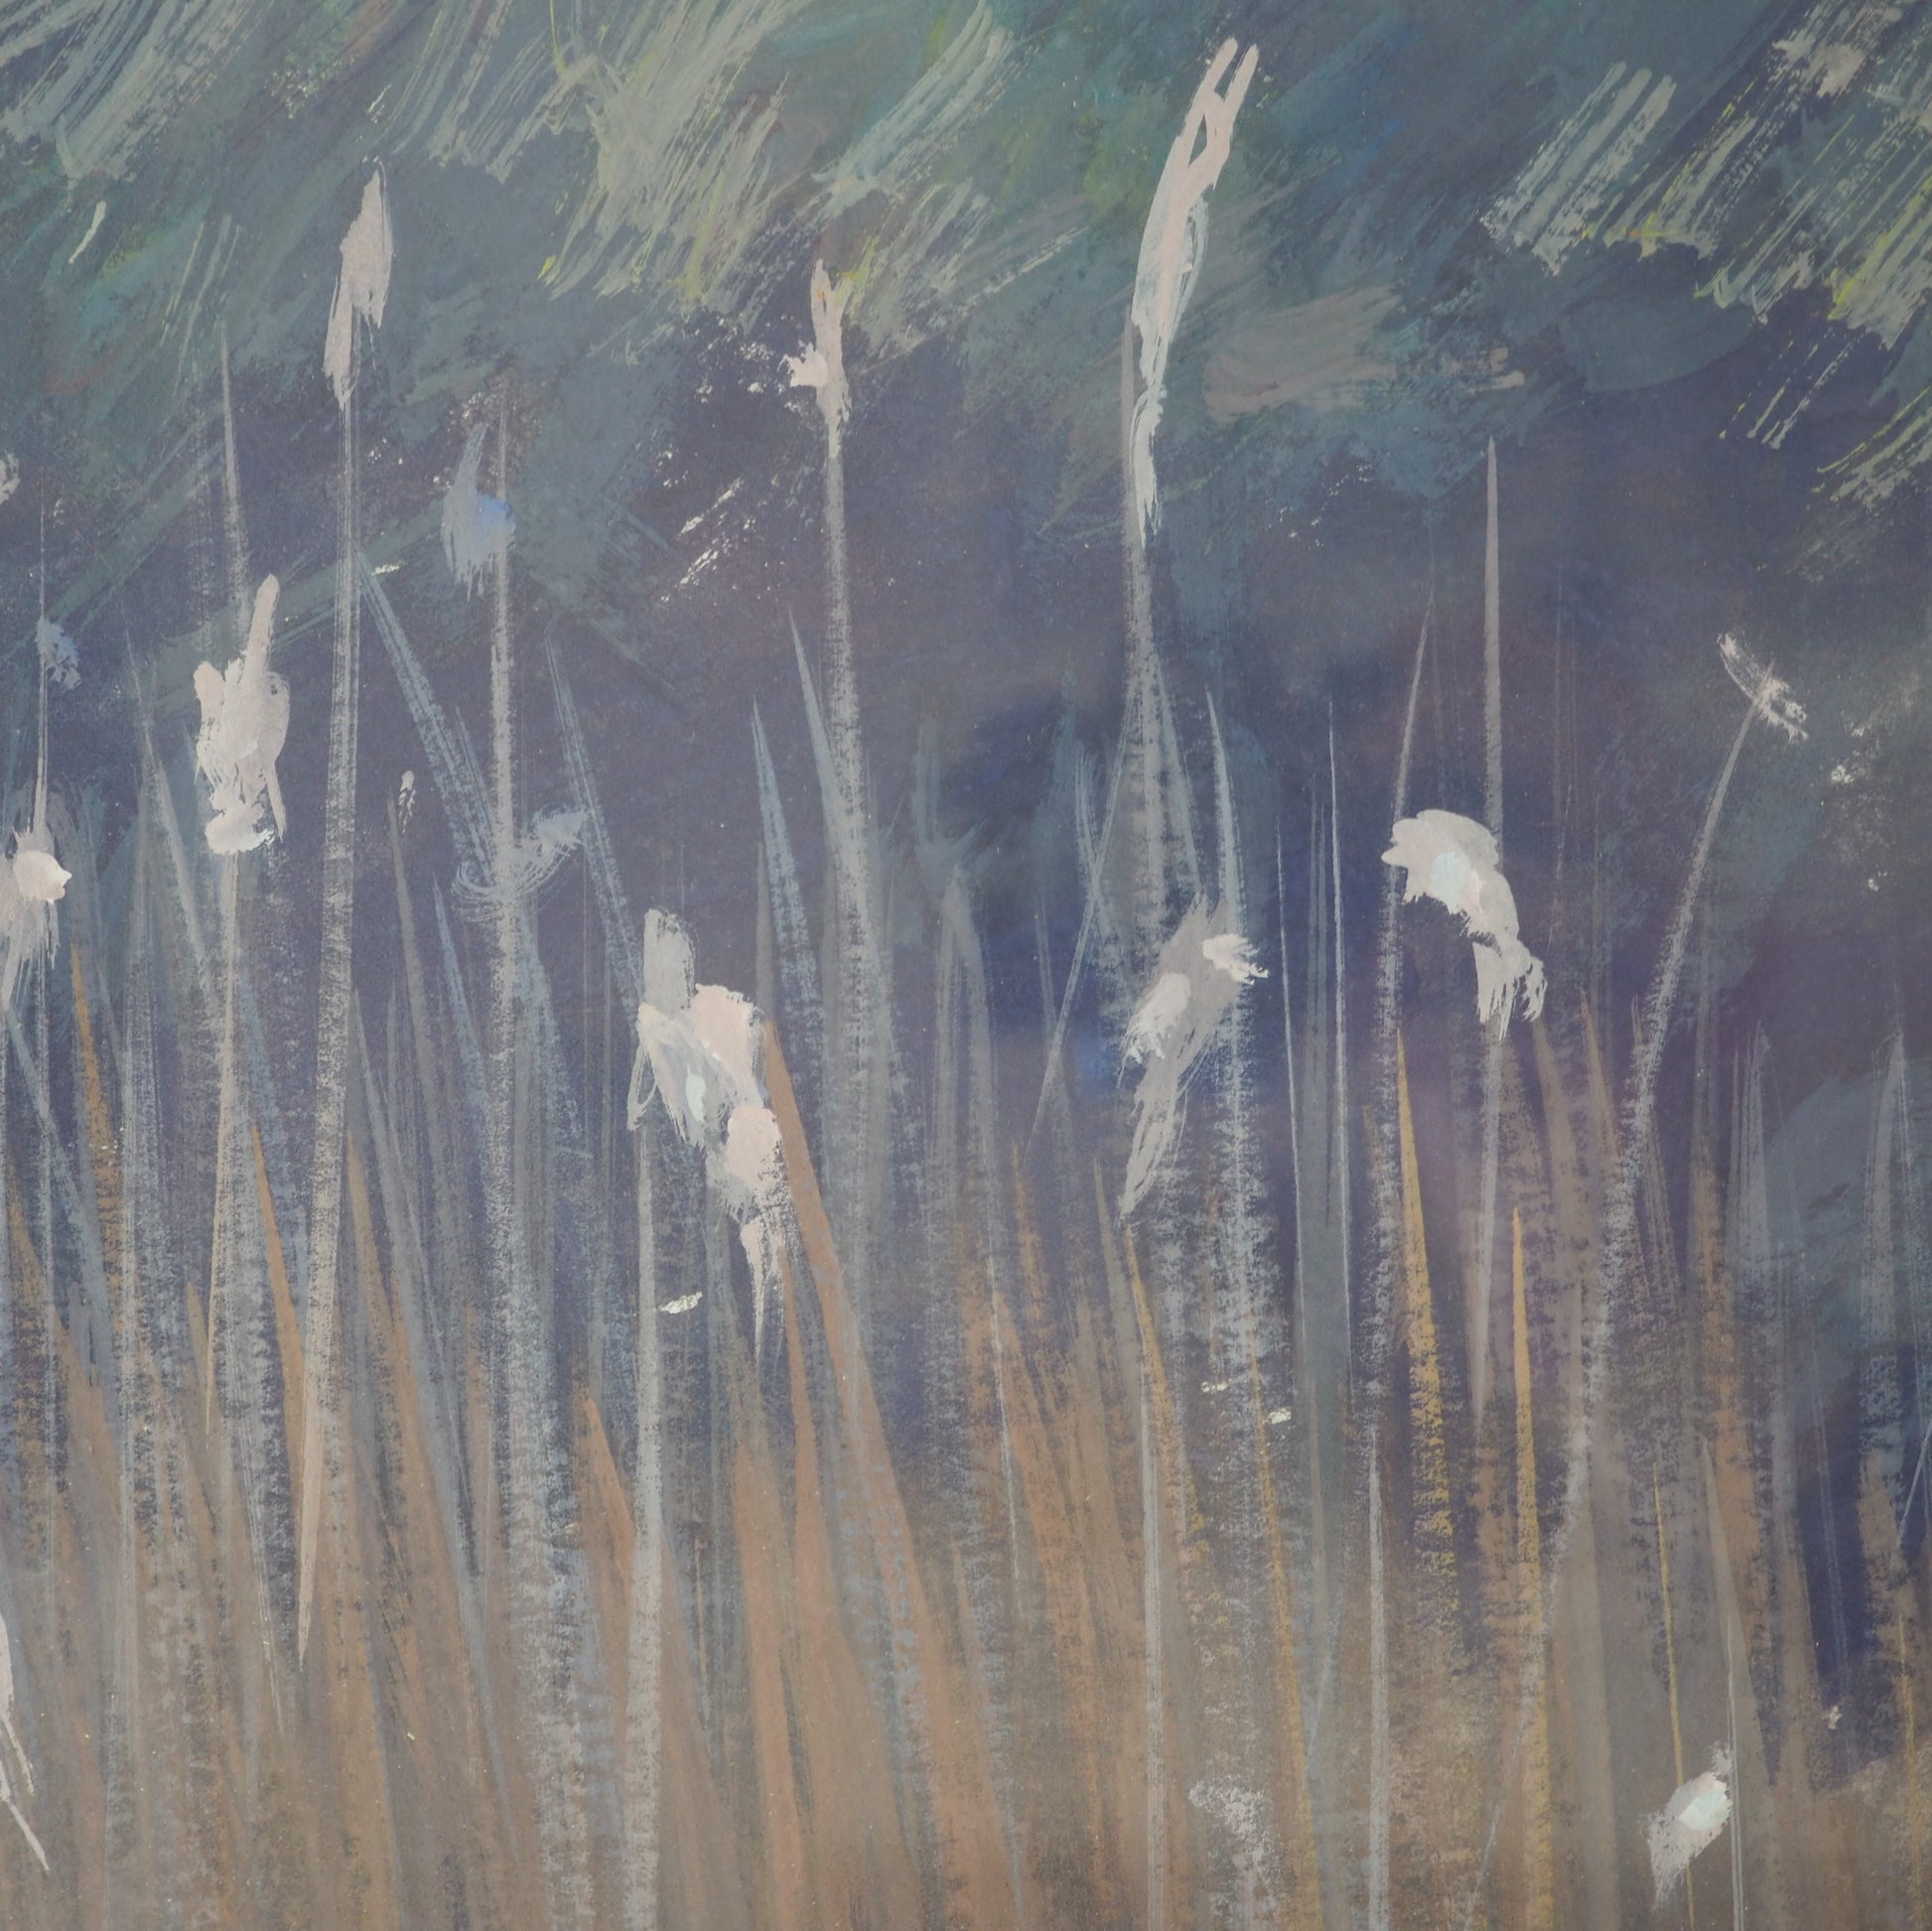 Day, Anthony - 'Winter Wetland' | Anthony Day | Primavera Gallery